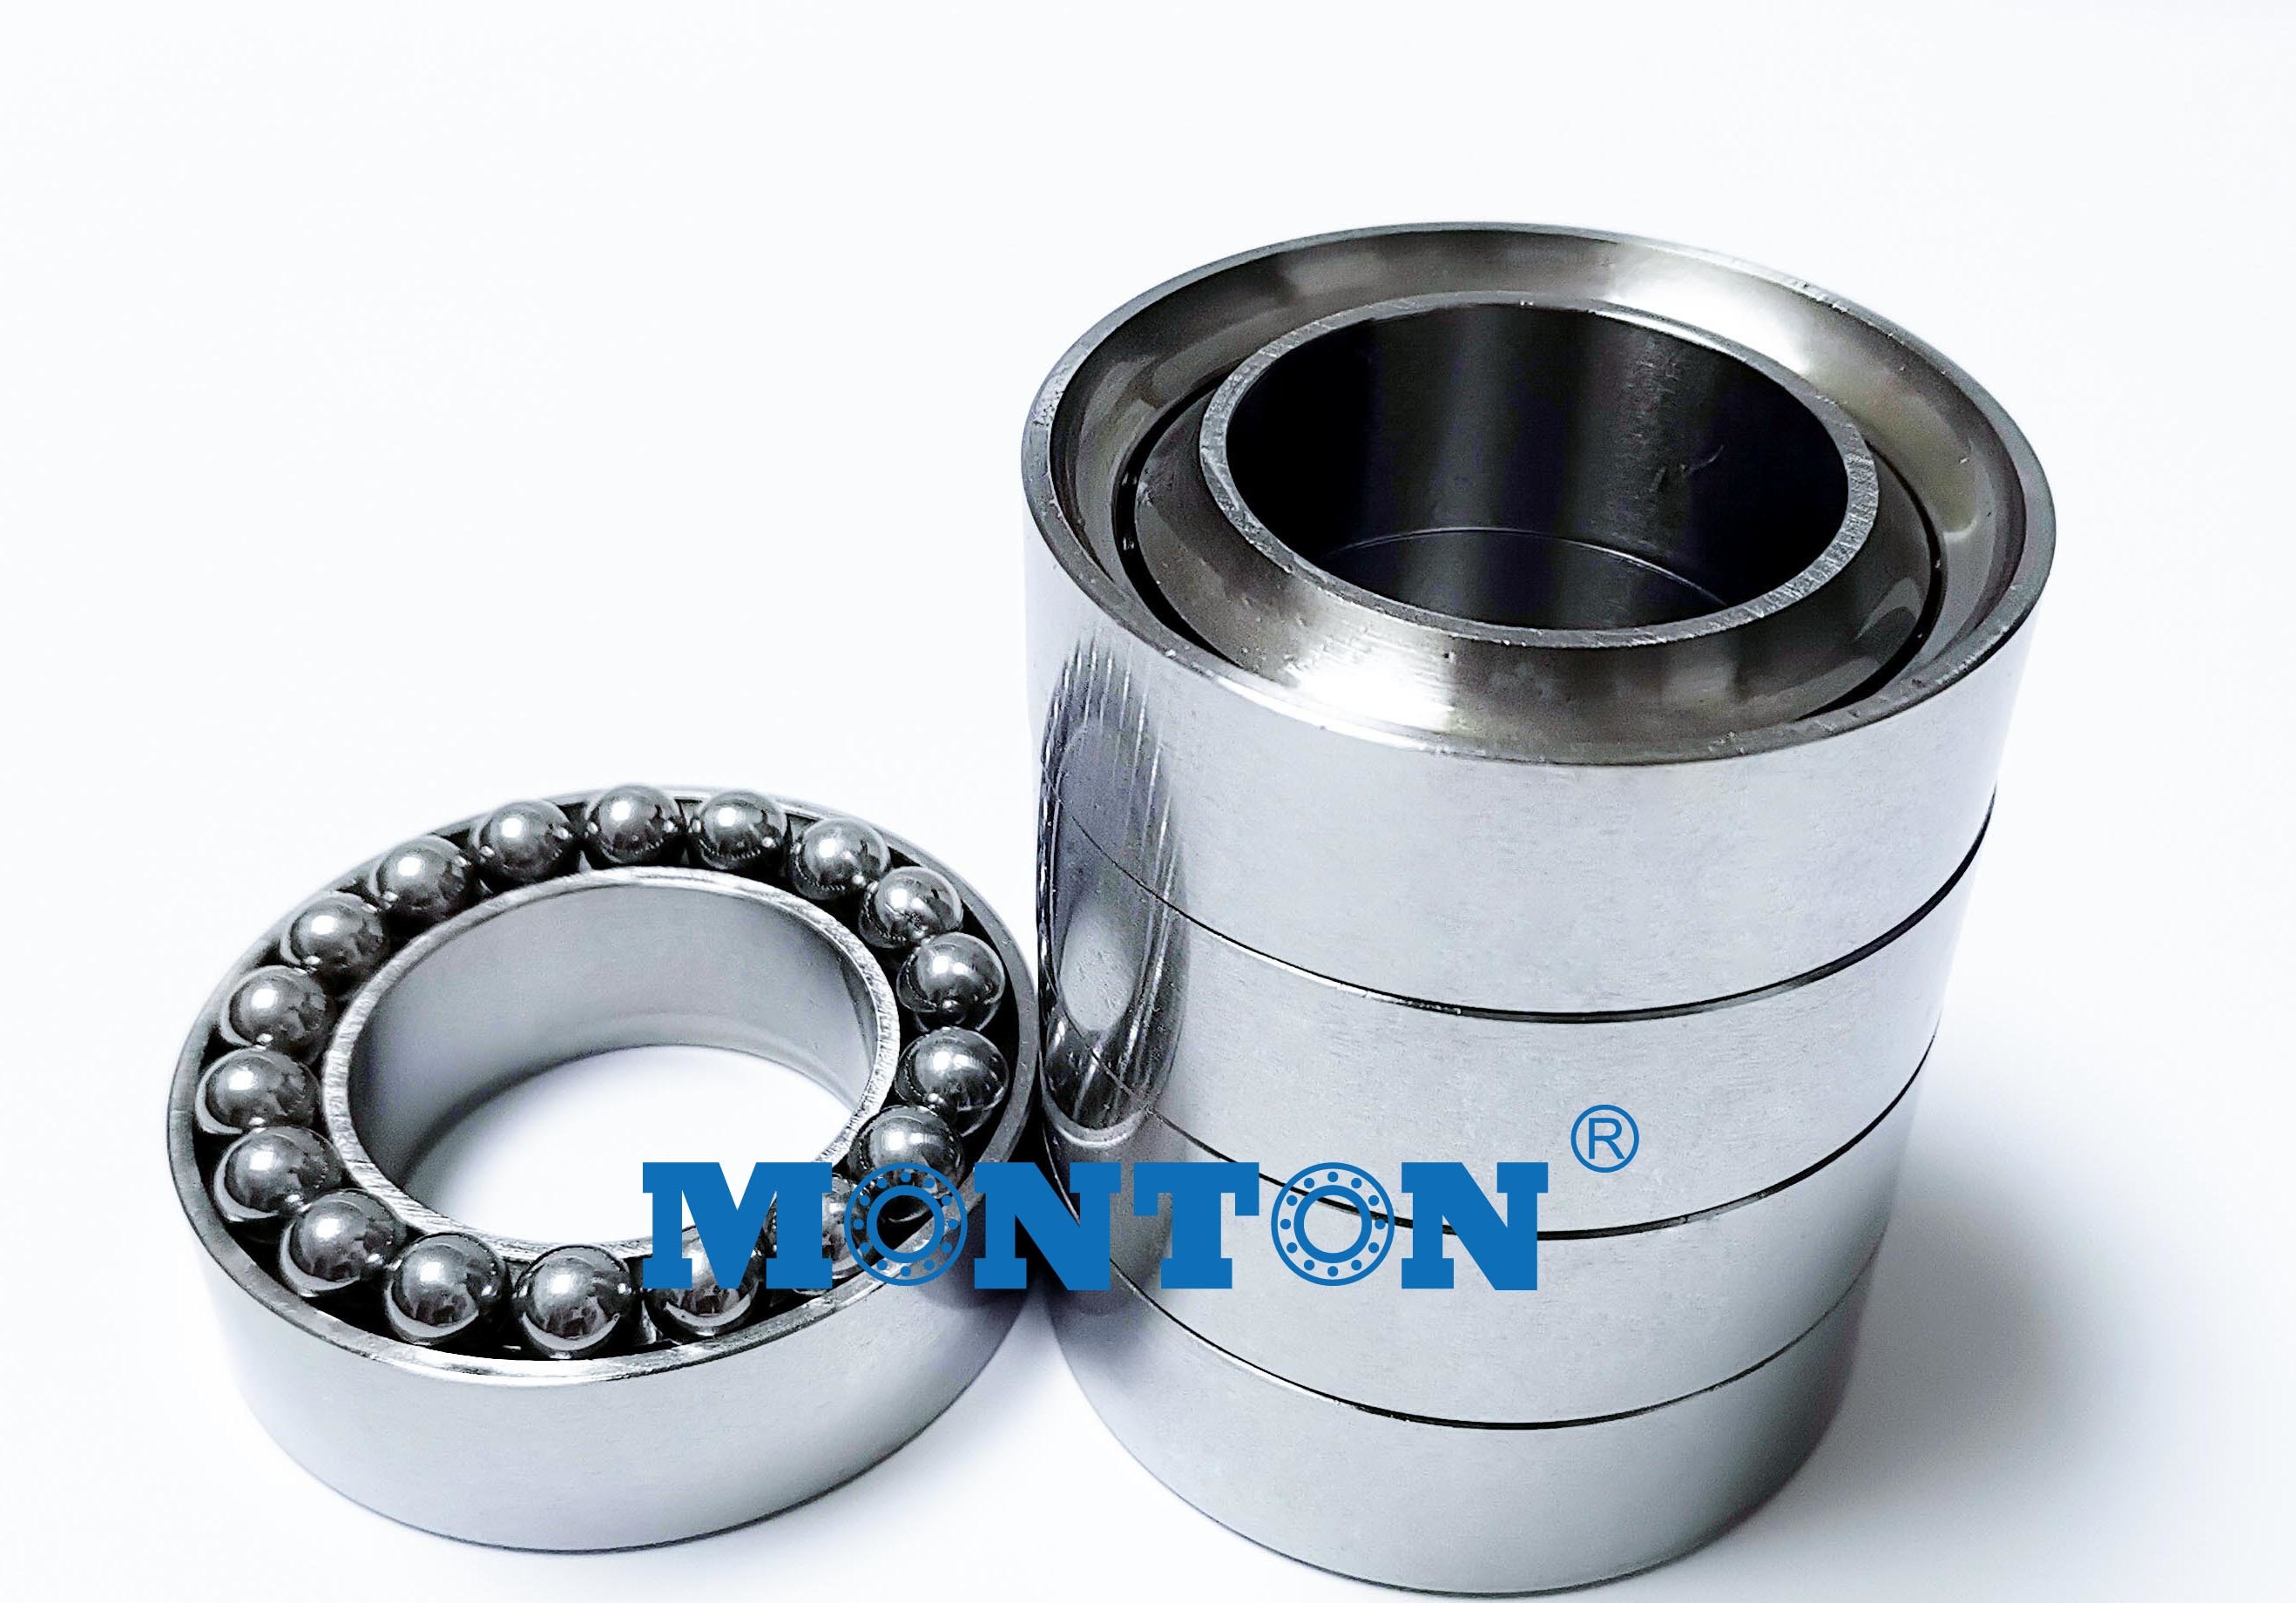 Quality 128708K 42*74*162mm Mud motor bearings drill motor bearings for sale